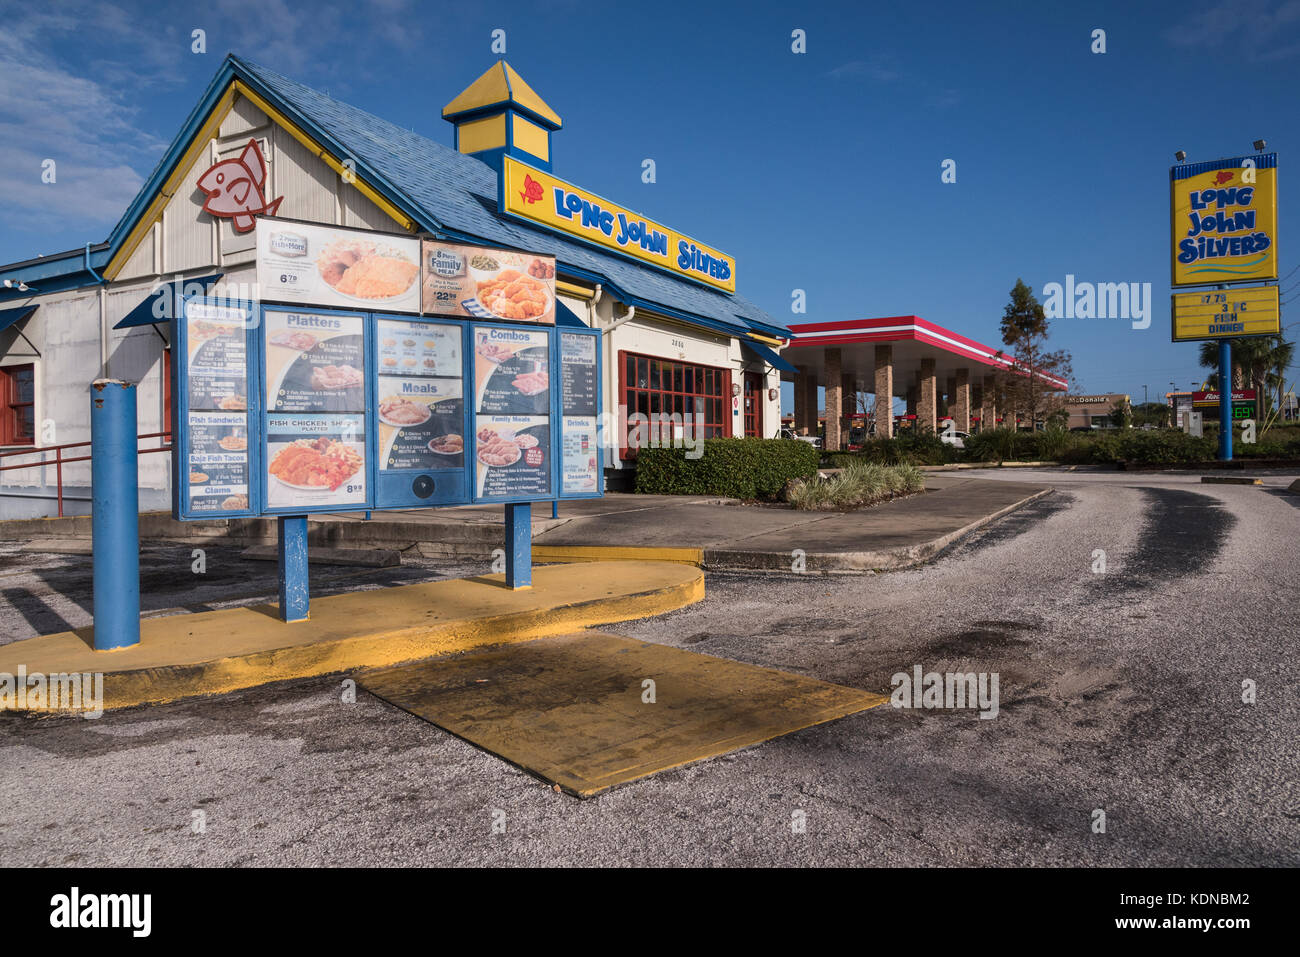 Long John Silvers Restaurant located in Eustis, Florida USA Stock Photo